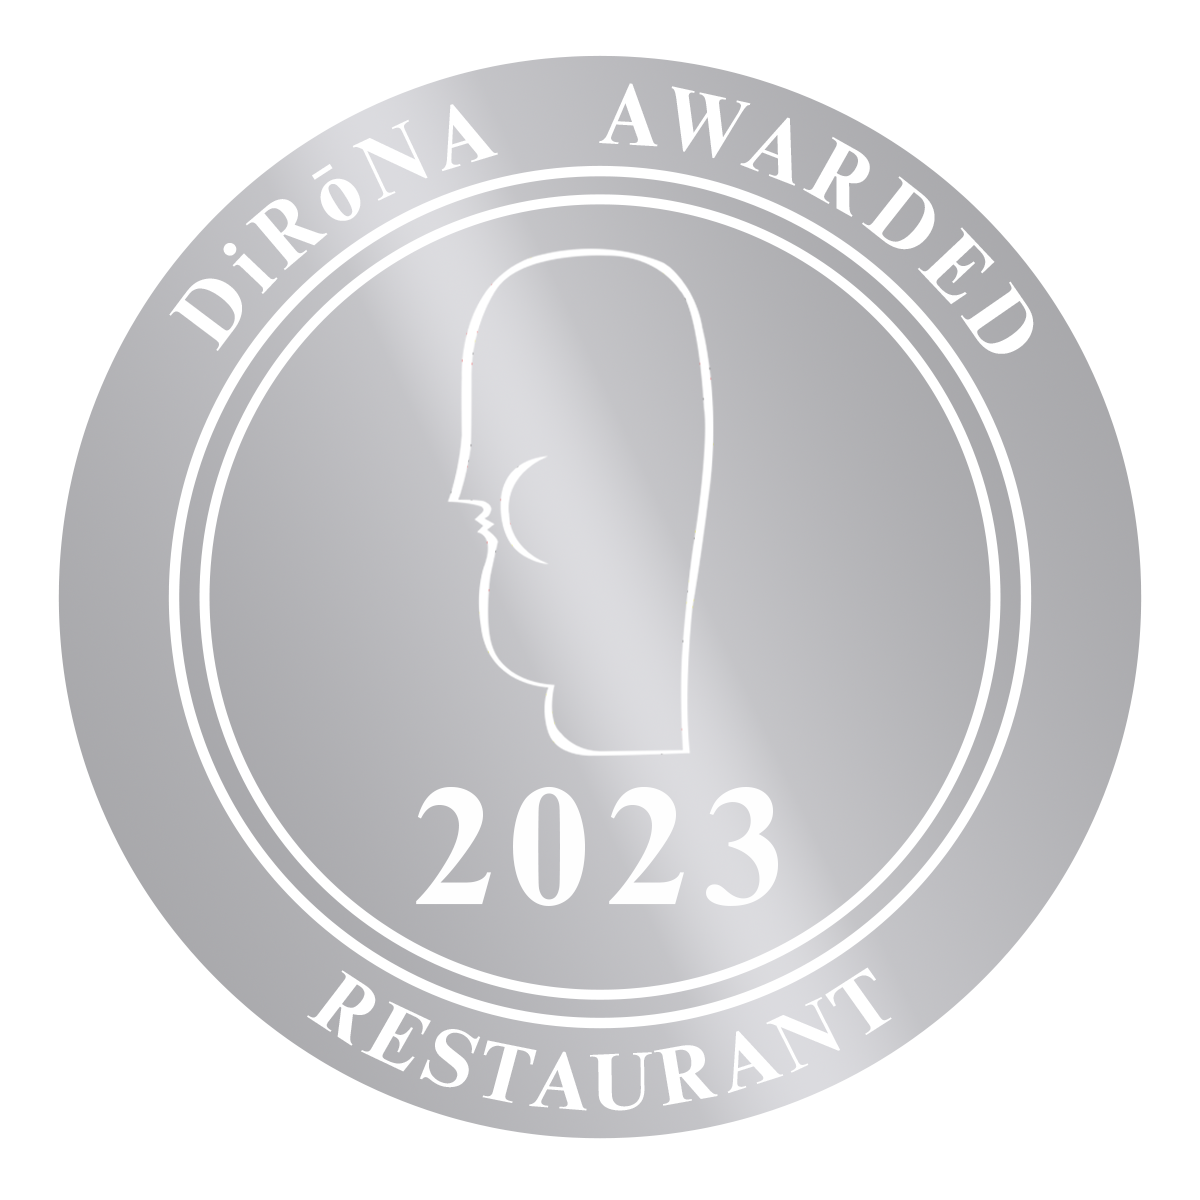 DiRoNA Awarded Restaurant Distinguished Restaurants of North America DiRoNA badge 2023